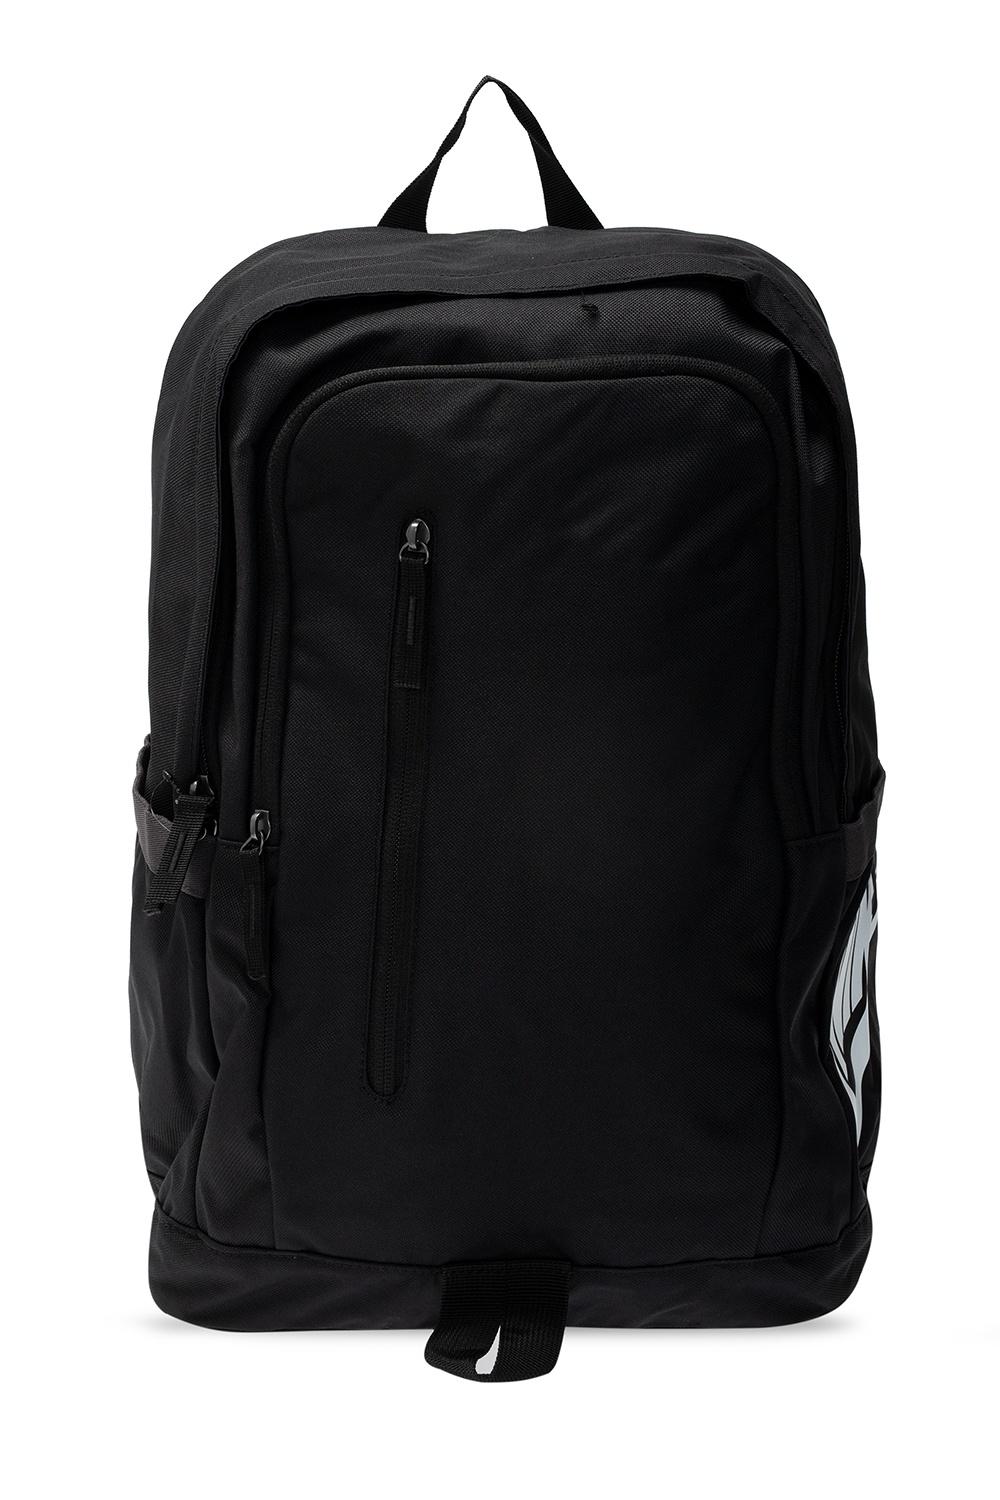 Nike All Soleday Backpack in Black | Lyst